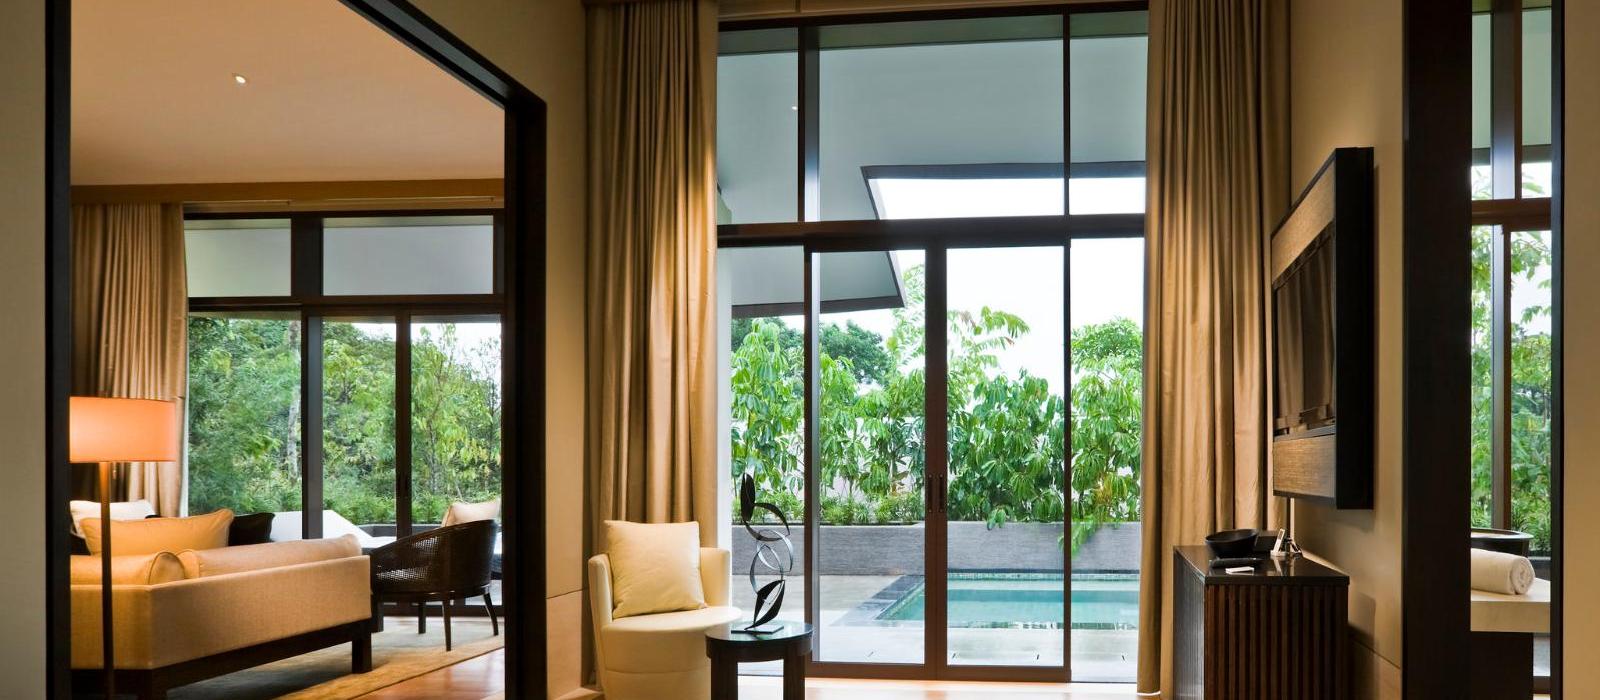 新加坡嘉佩乐酒店(Capella Singapore) 单卧别墅图片  www.lhw.cn